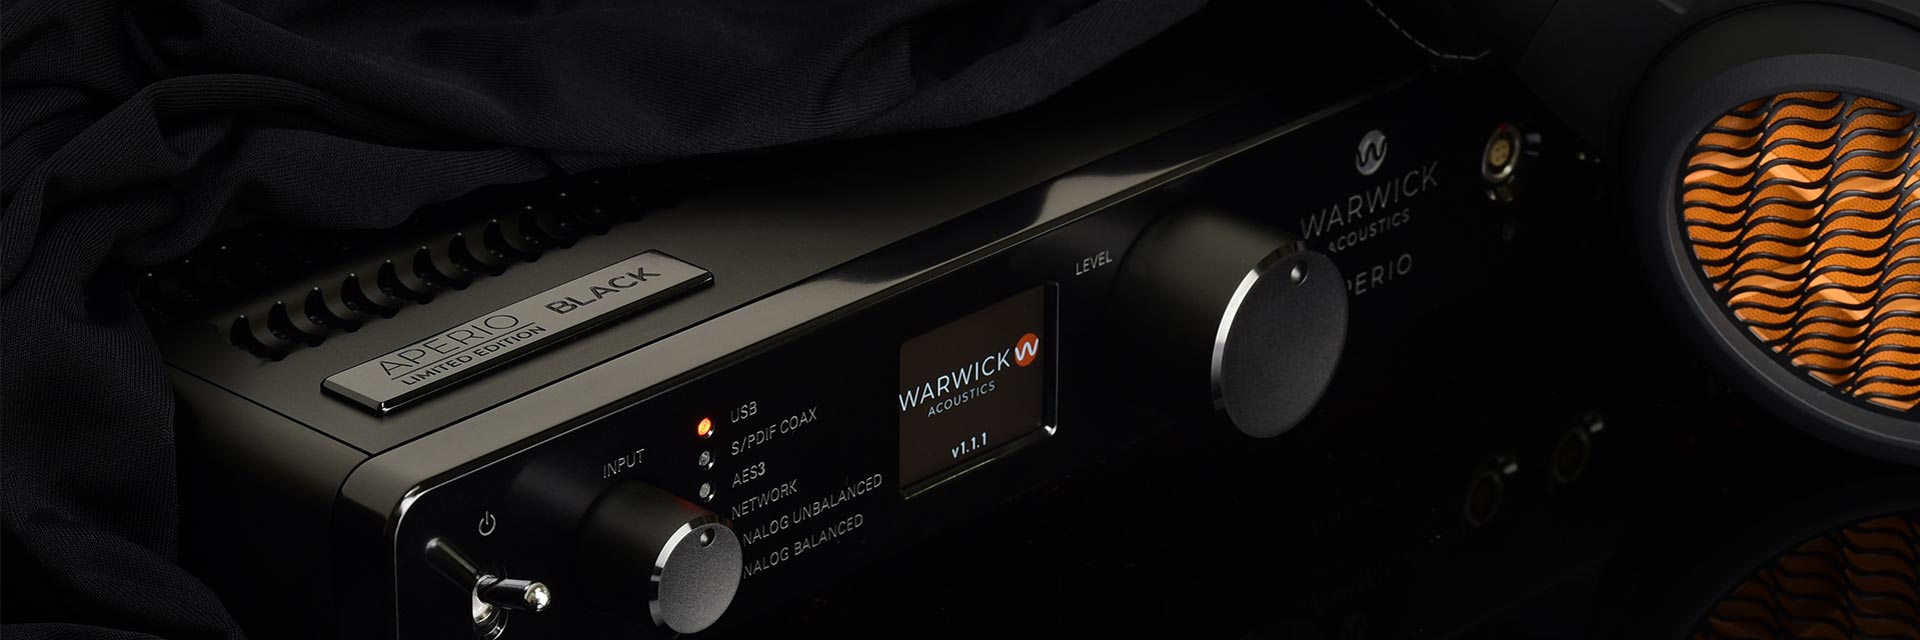 Warwick Aperio Black Limited Edition